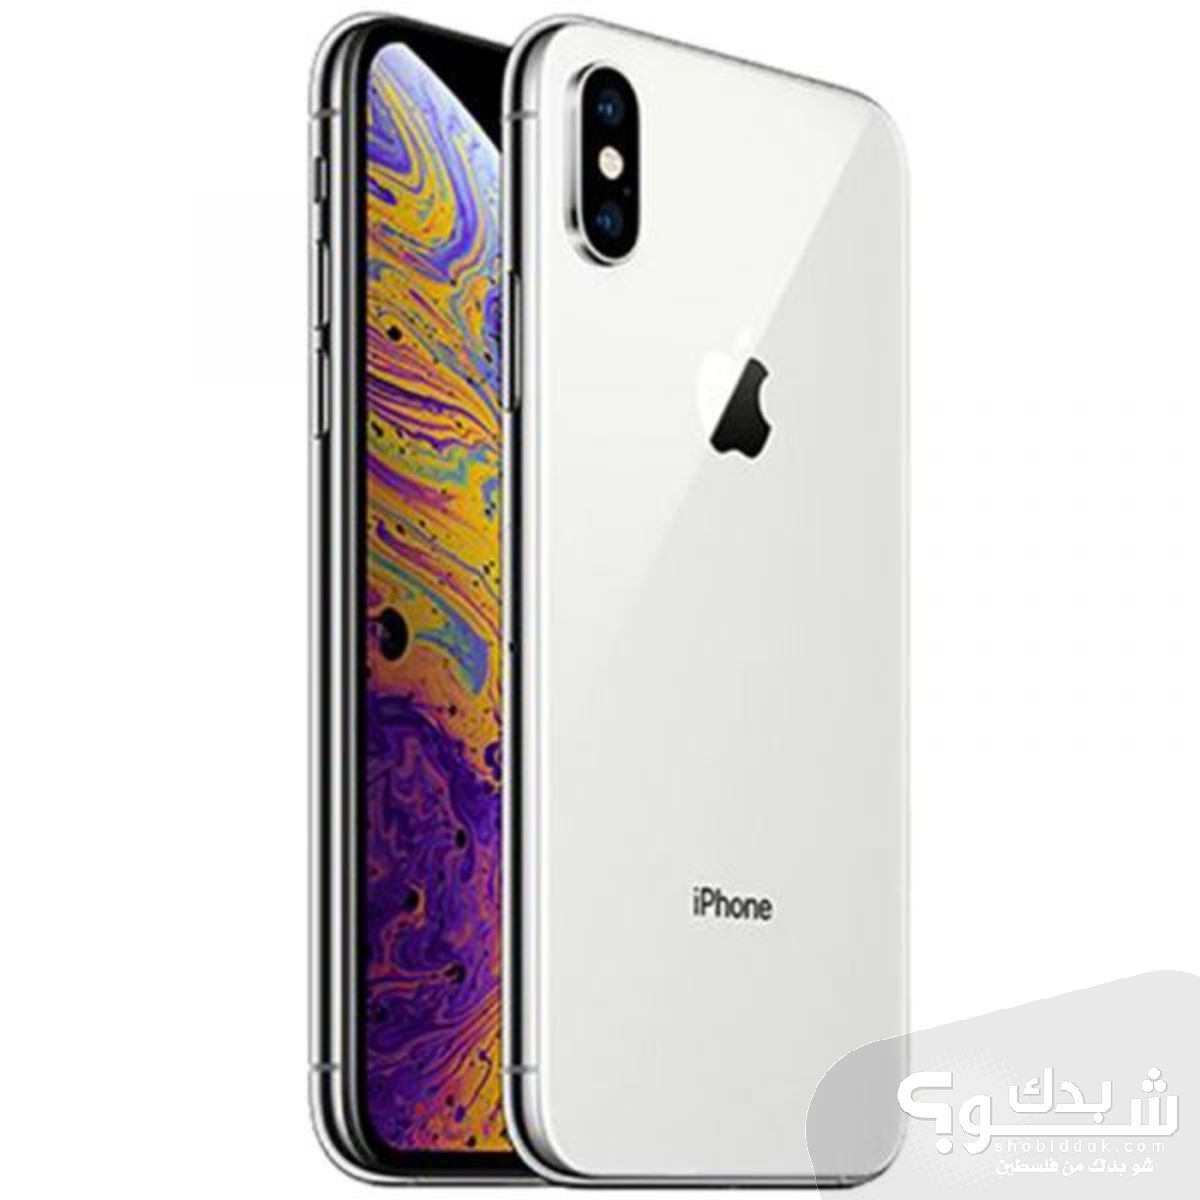 Apple ايفون XS Max - مستعمل | شو بدك من فلسطين؟